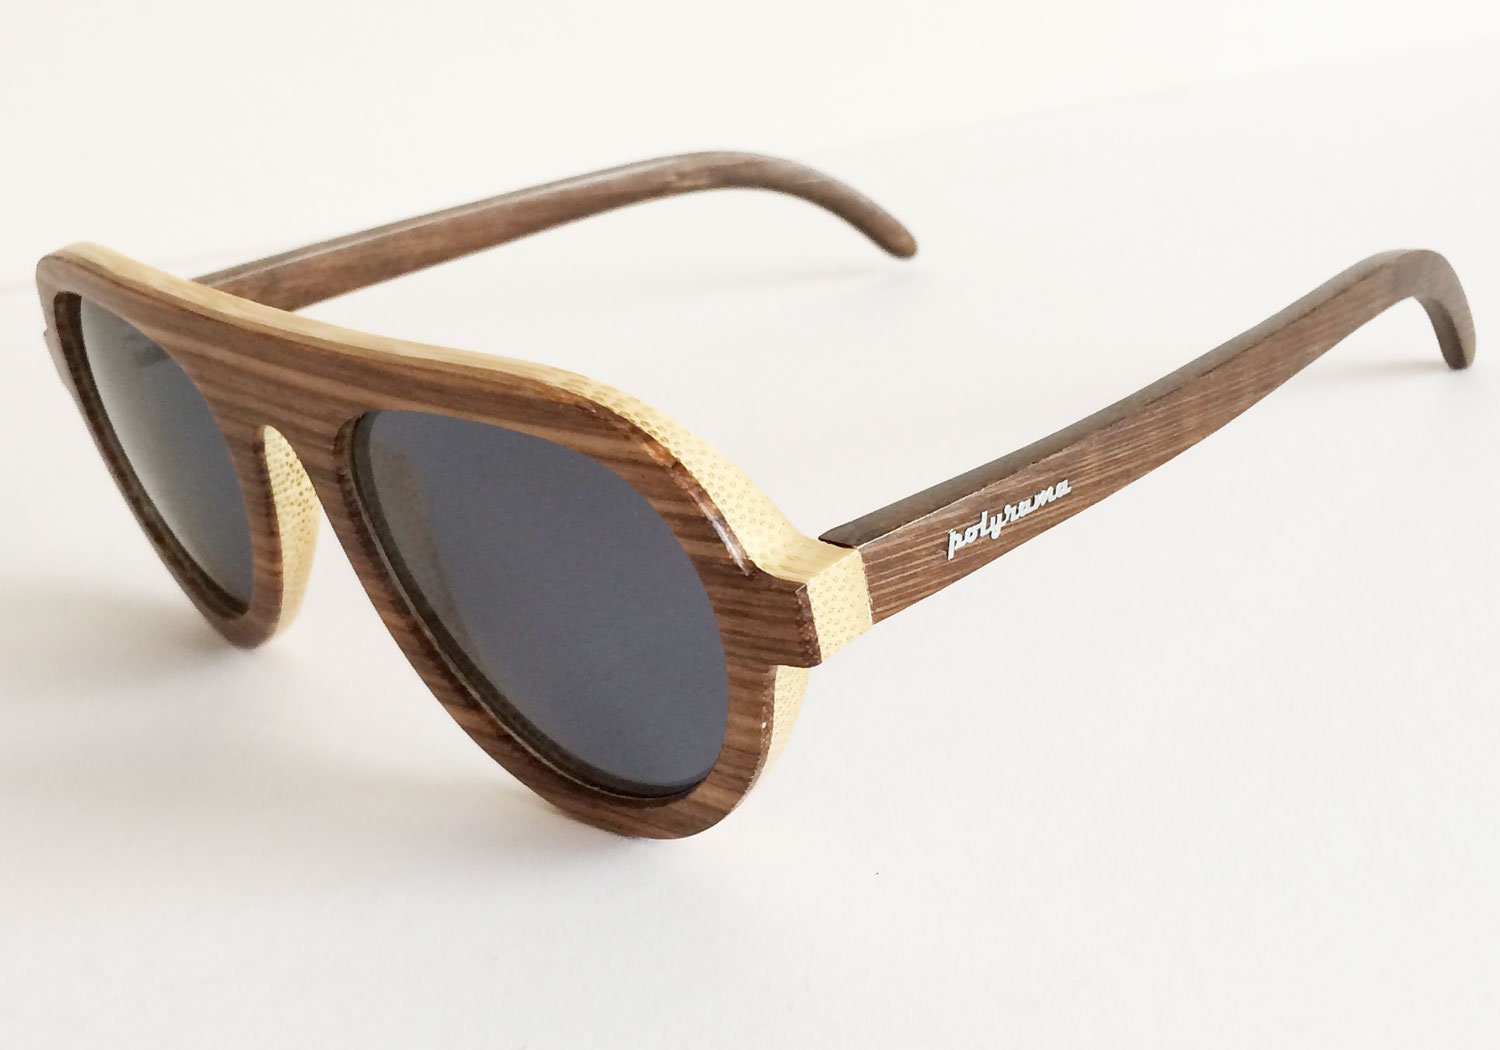 Wooden aviator sunglasses by Polyrama #3905